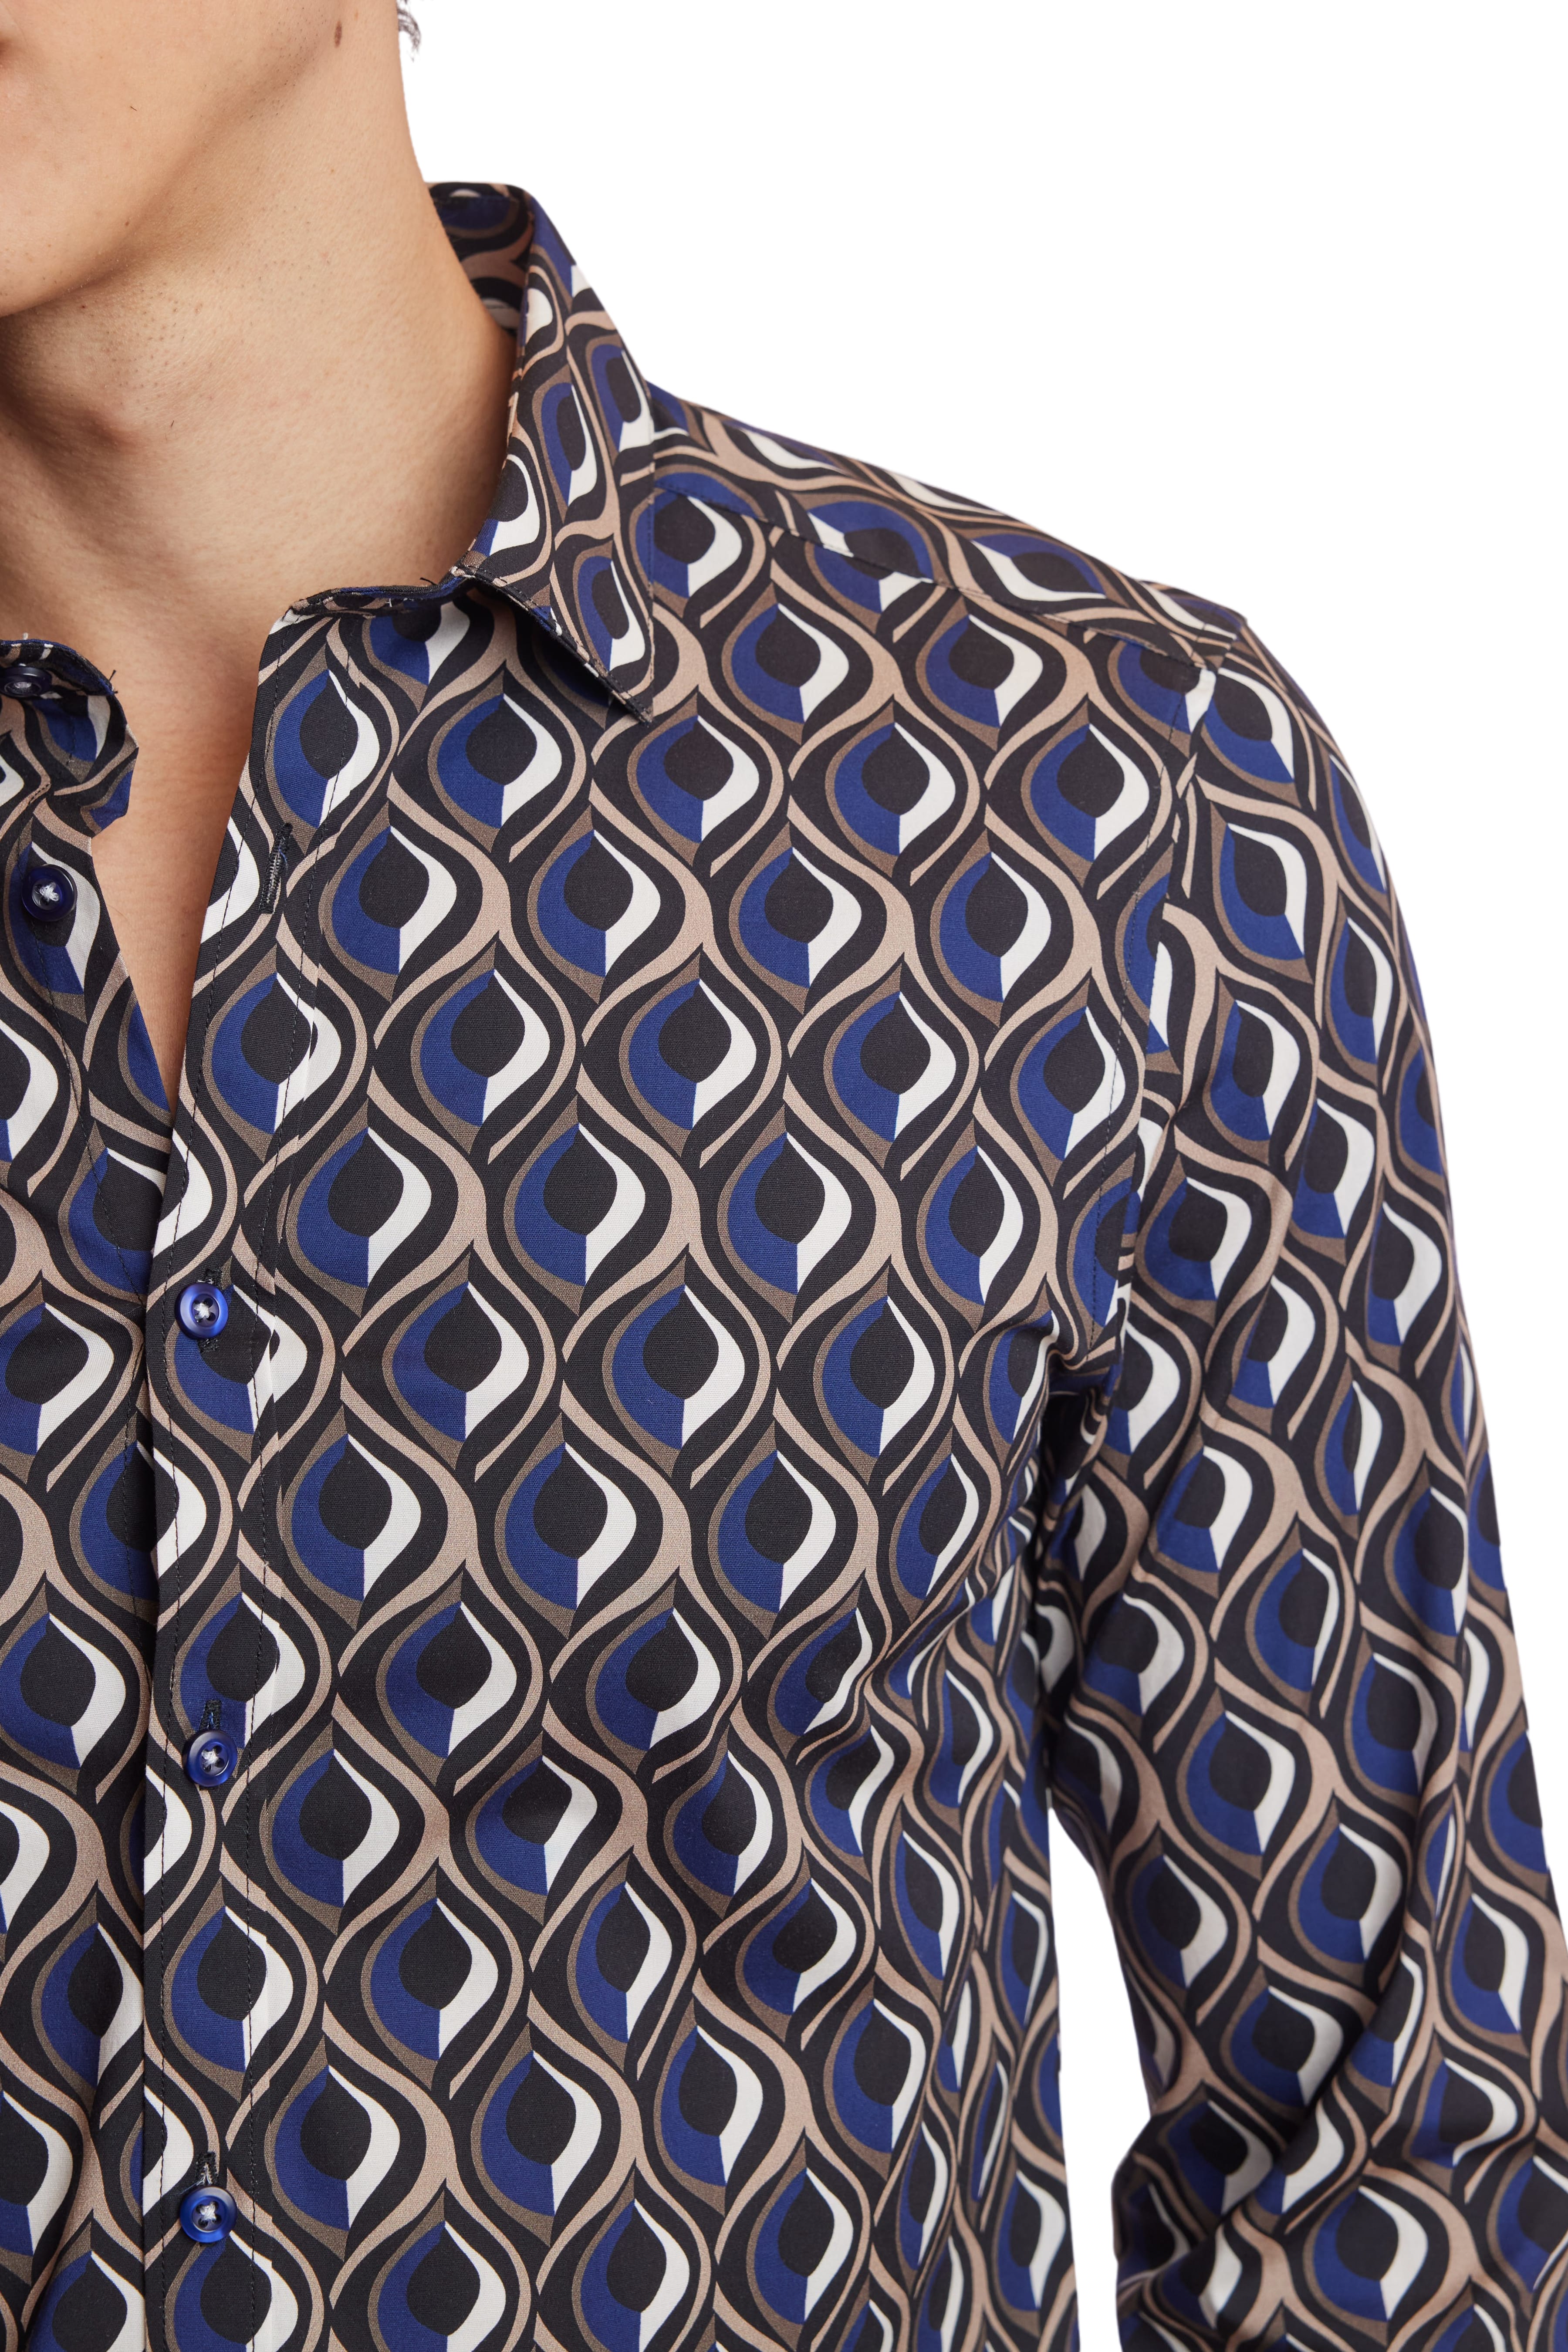 Big & Tall Samuel Spread Collar Shirt - Navy Blk Tan Geo